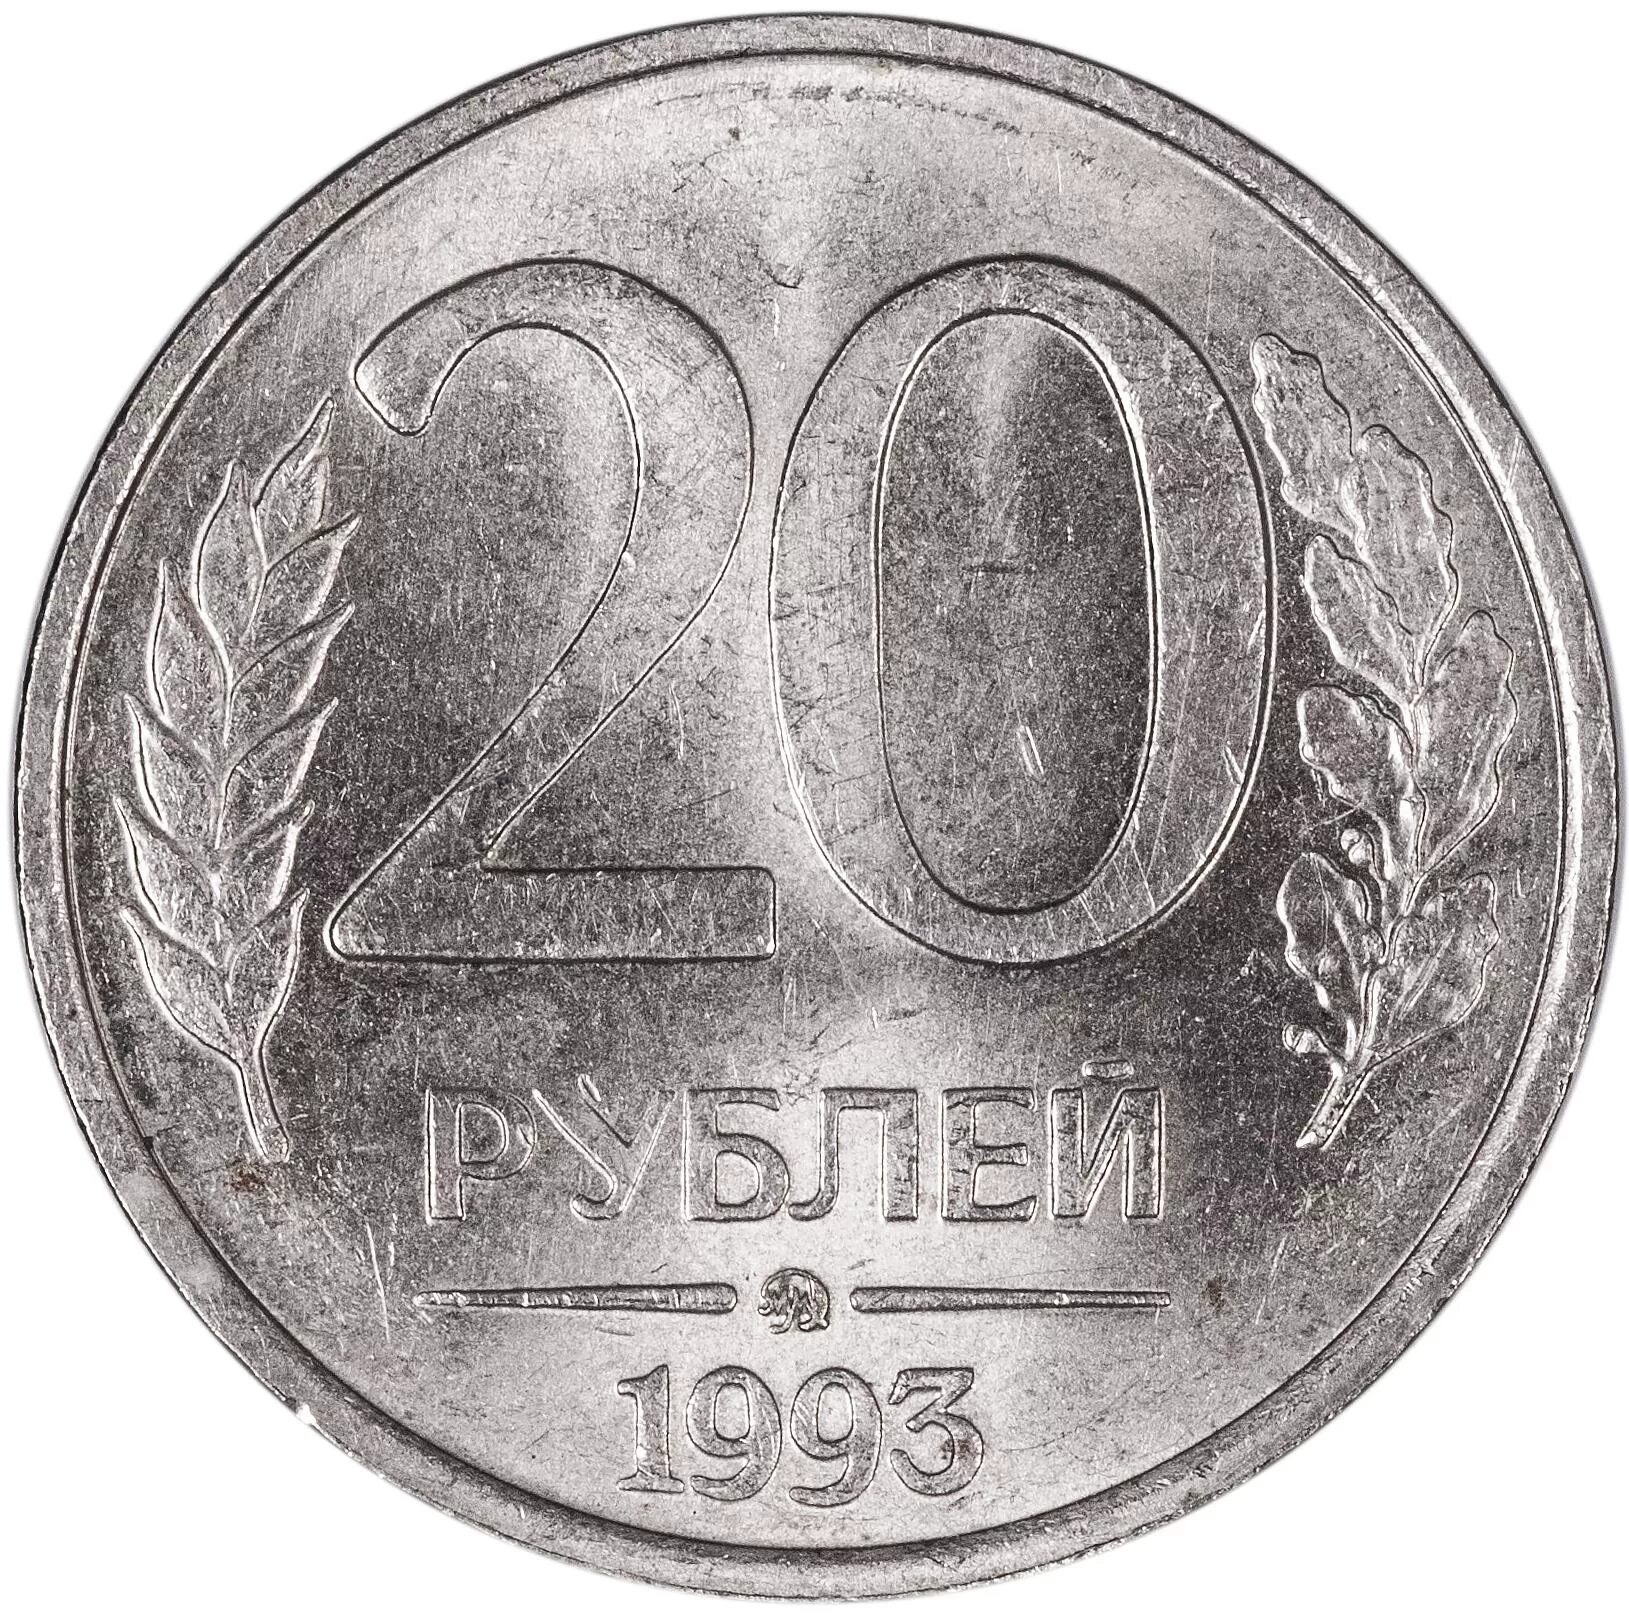 20 рублей ммд. 20 Рублей 1993 ММД немагнитные. 20 Рублей 1993 ММД. ММД монета 20 рублей 1993. 20 Рублей.